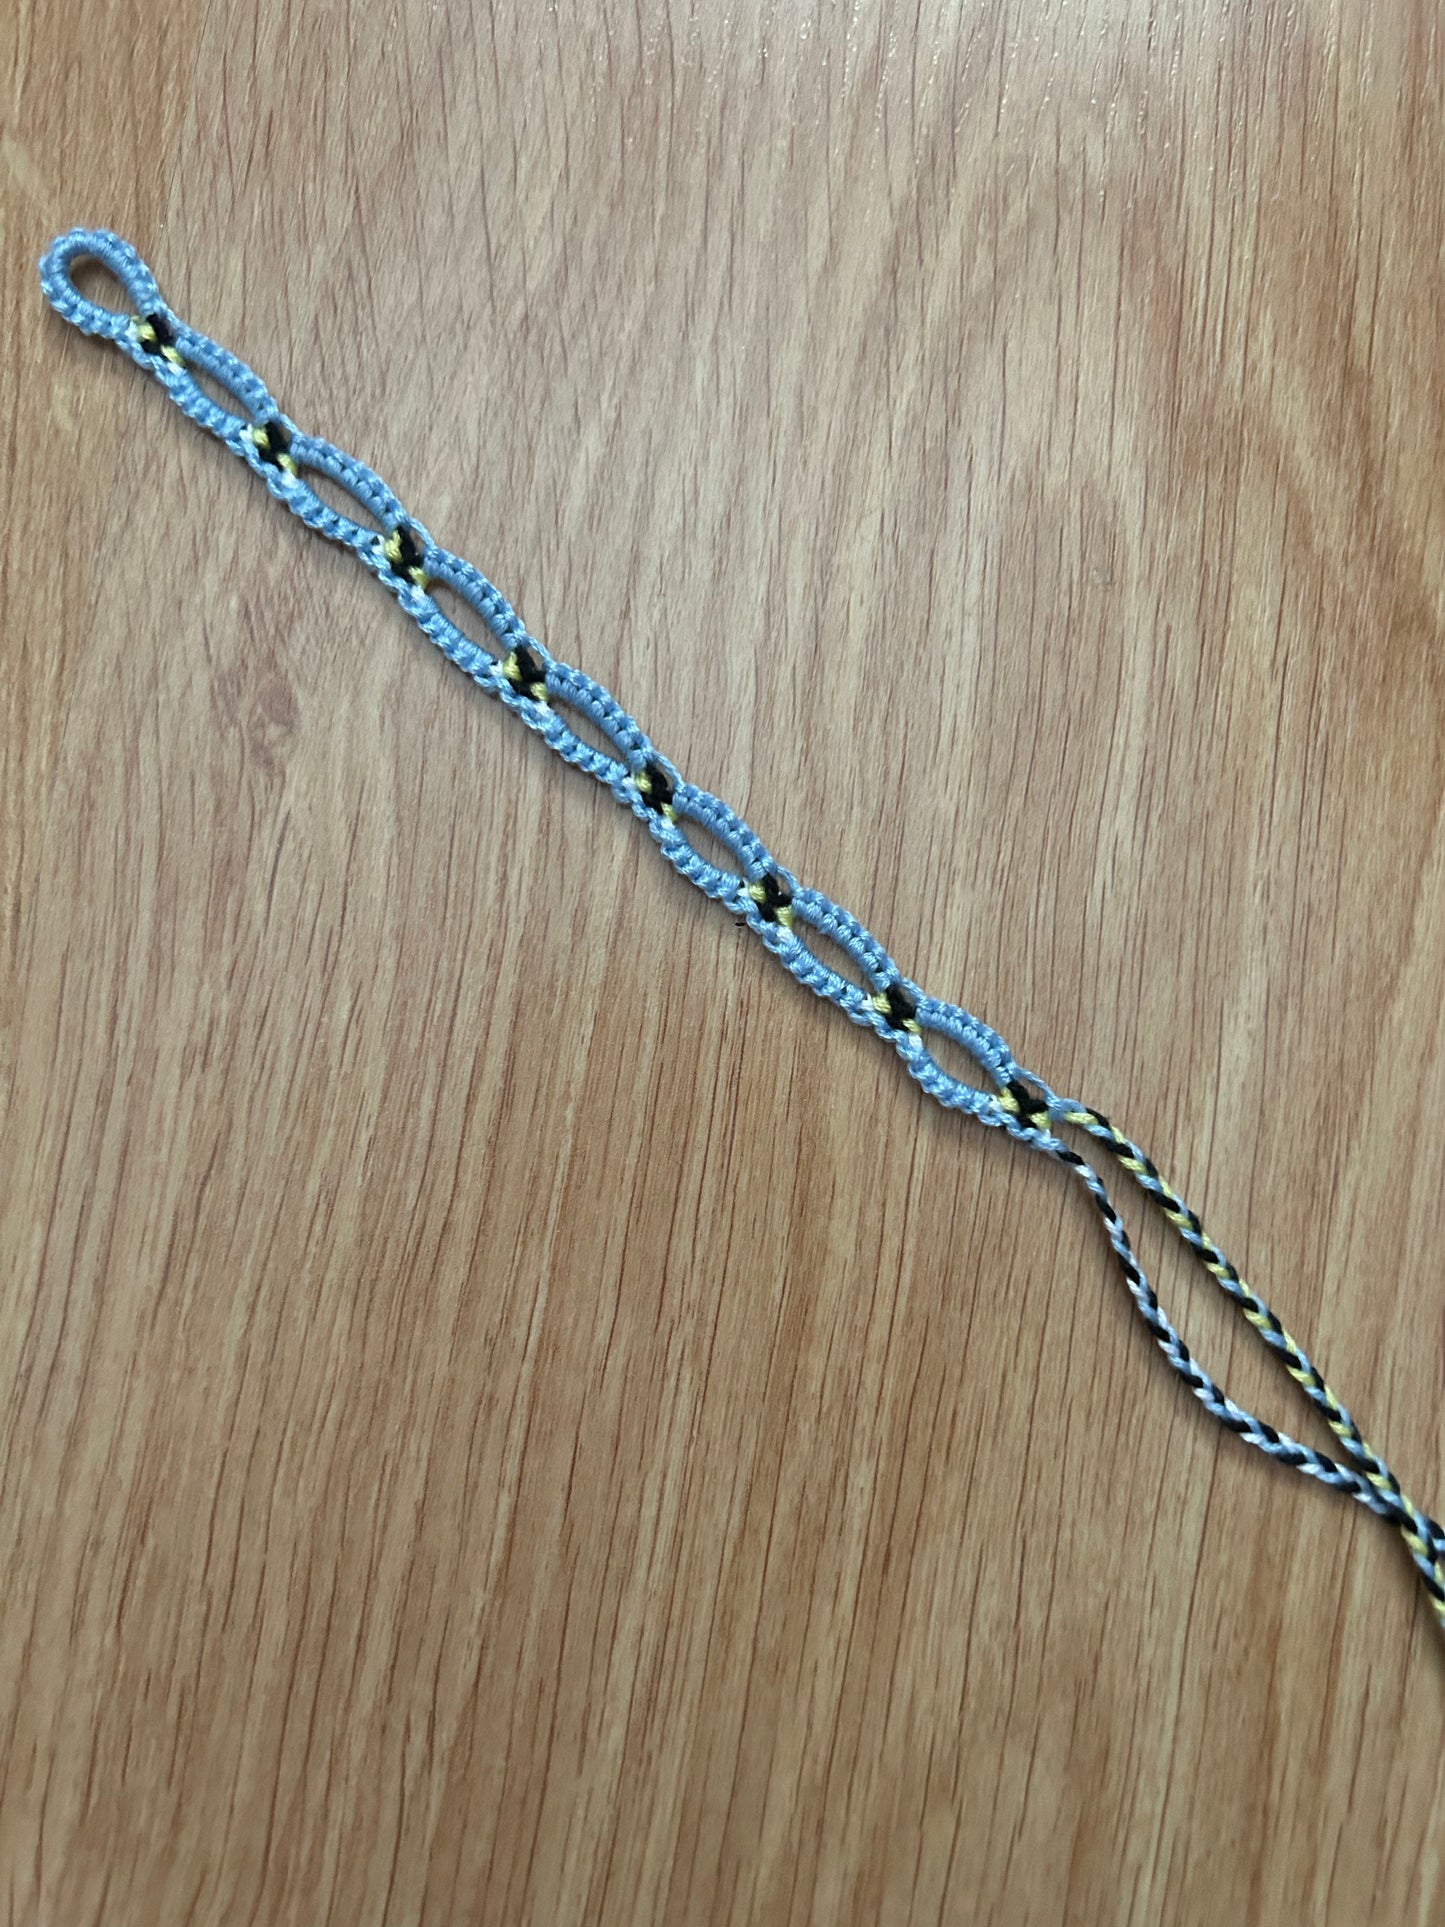 Bee chain bracelet or anklet